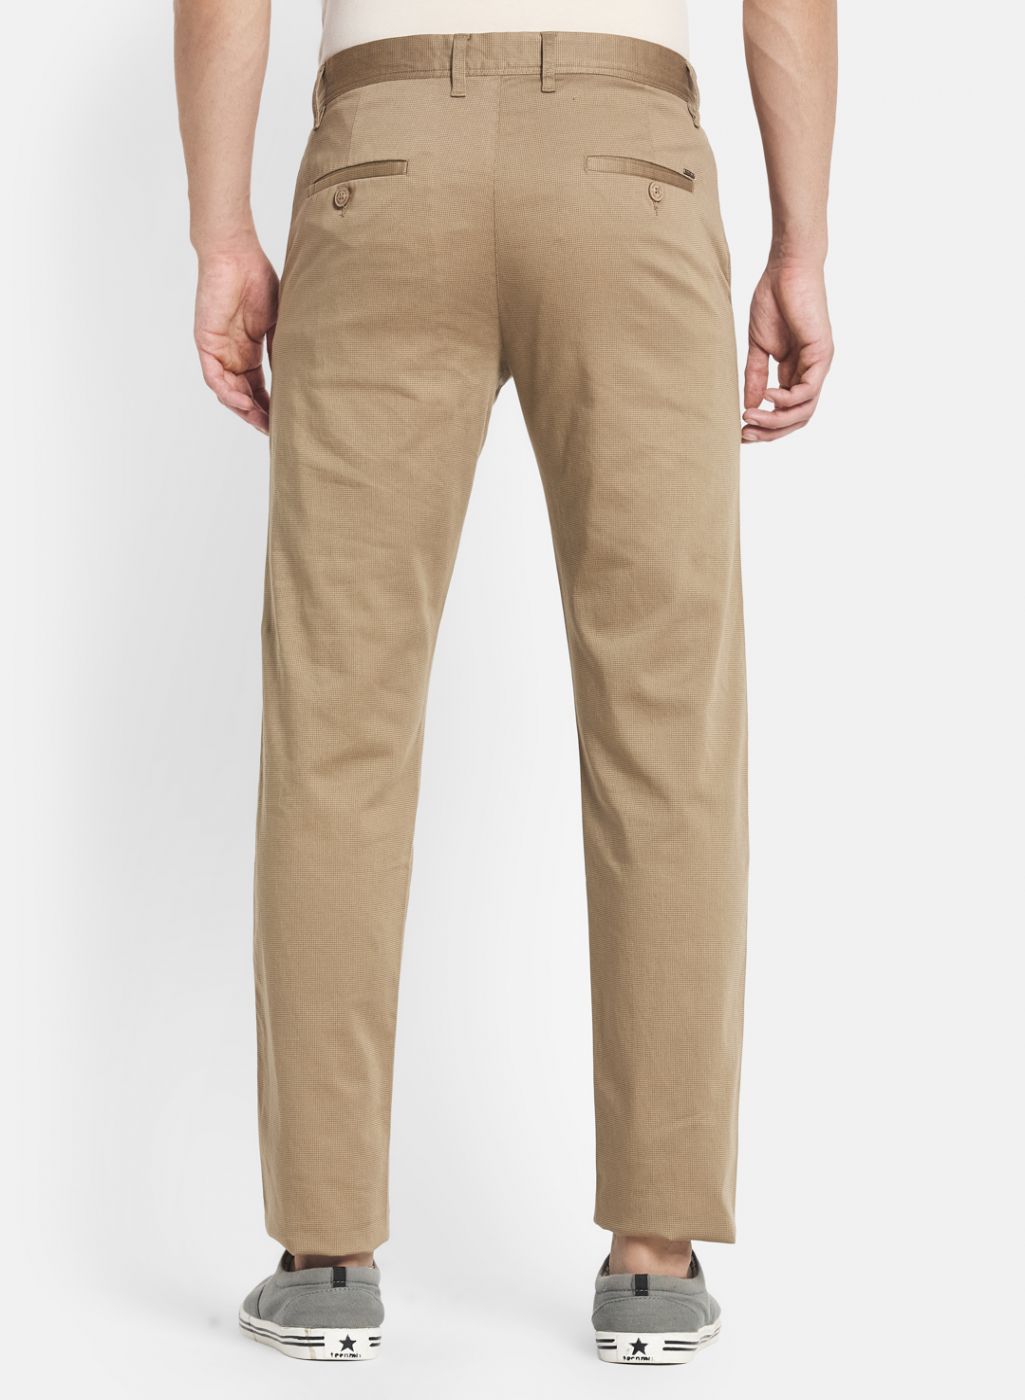 Spring Autumn Mens Cargo Pants Multi Pocket Khaki Trousers Casual Military  Cotton Pants Men Plus Size Pantalon Cargo Homme - Casual Pants - AliExpress